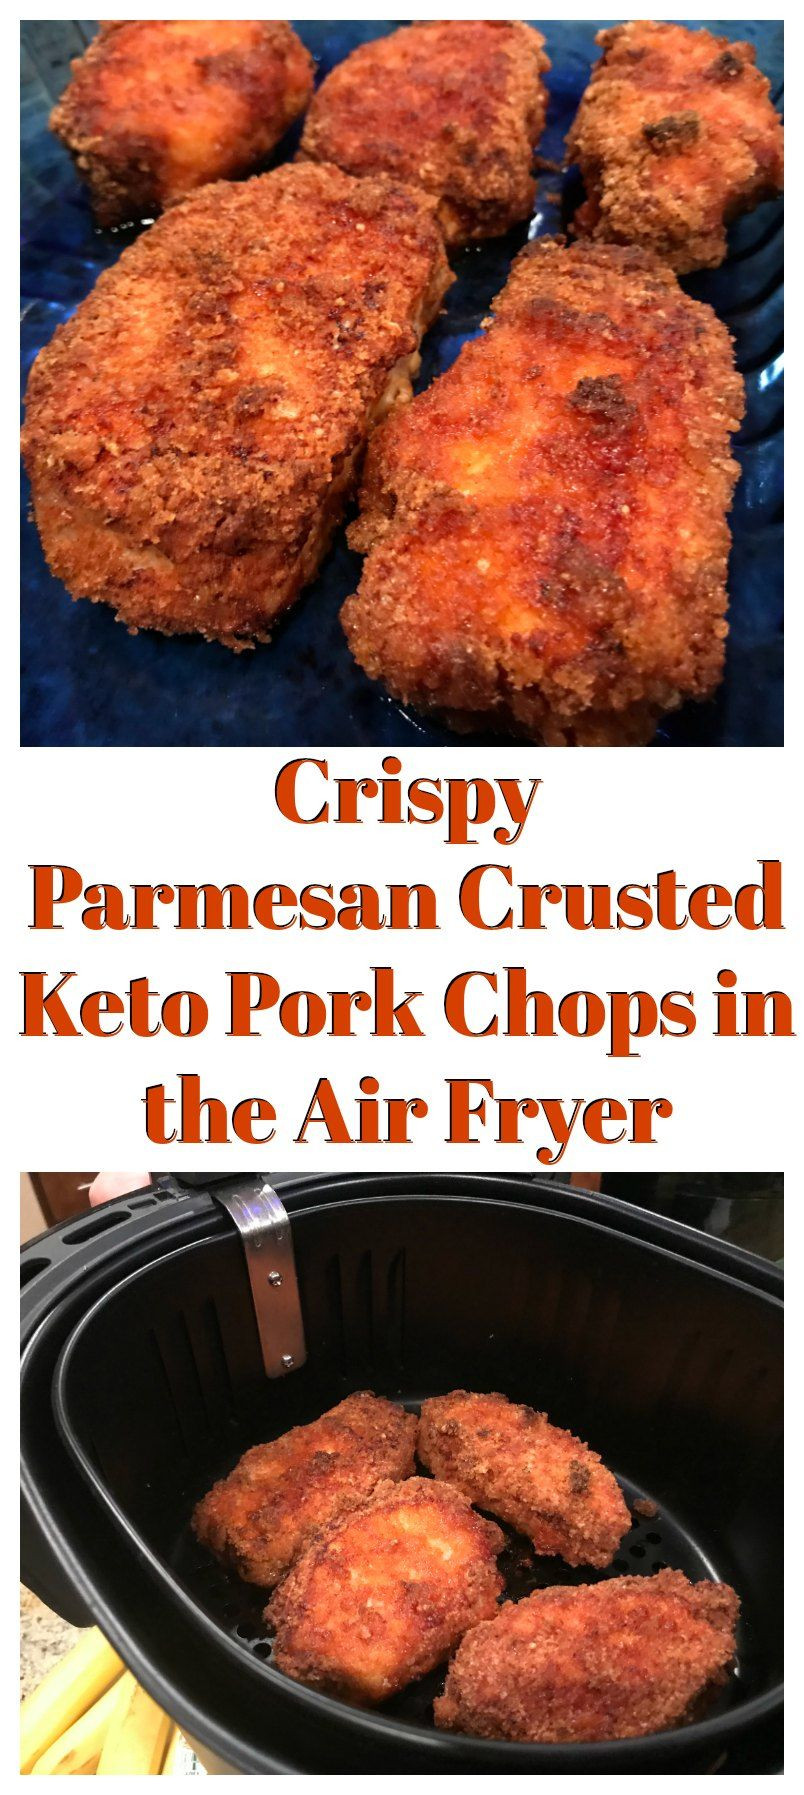 Air Fryer Keto Pork Chops
 Crispy Keto Parmesan Crusted Pork Chops in the Air Fryer